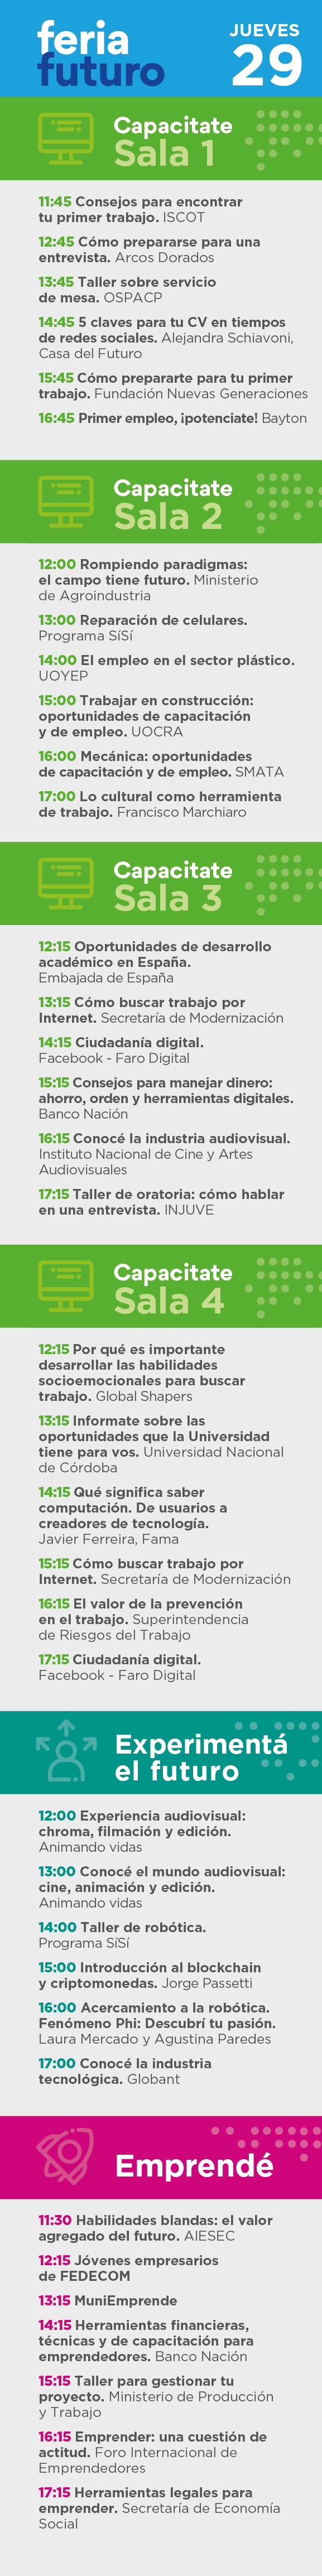 feria futuro Córdoba, agenda 29 de Agosto